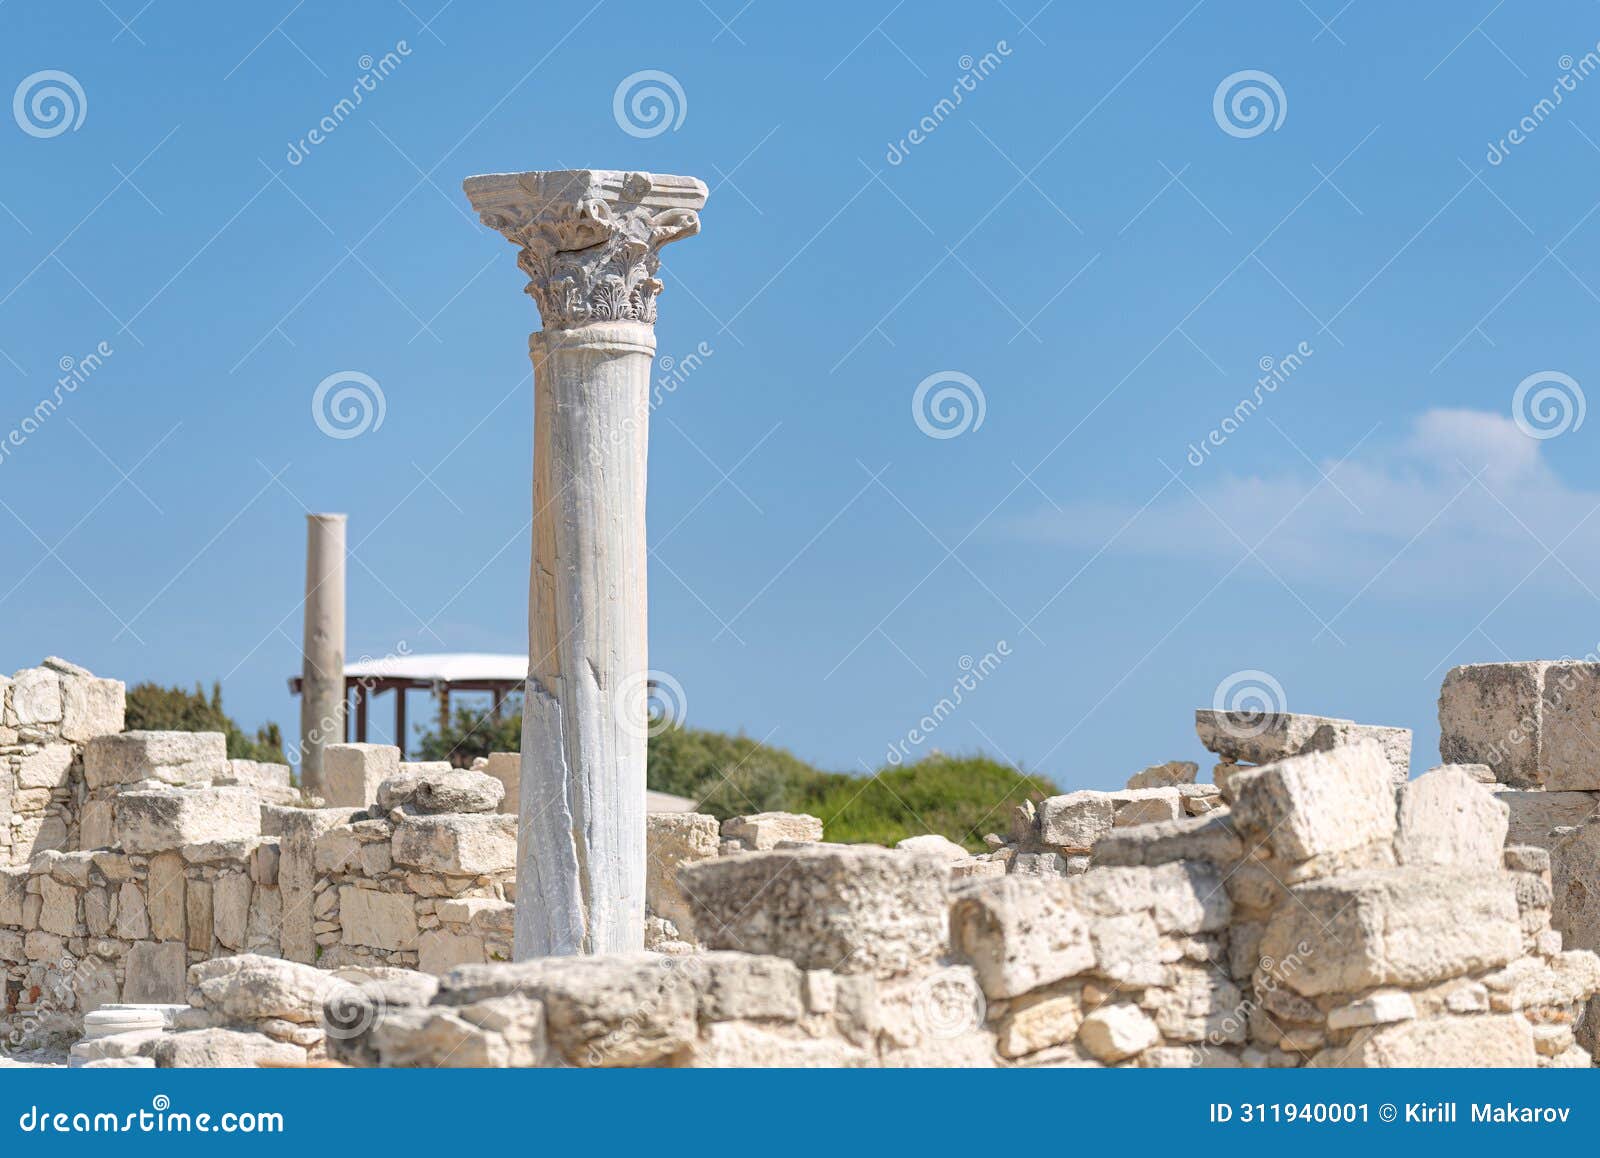 kourion archaeological site. limassol district, cyprus